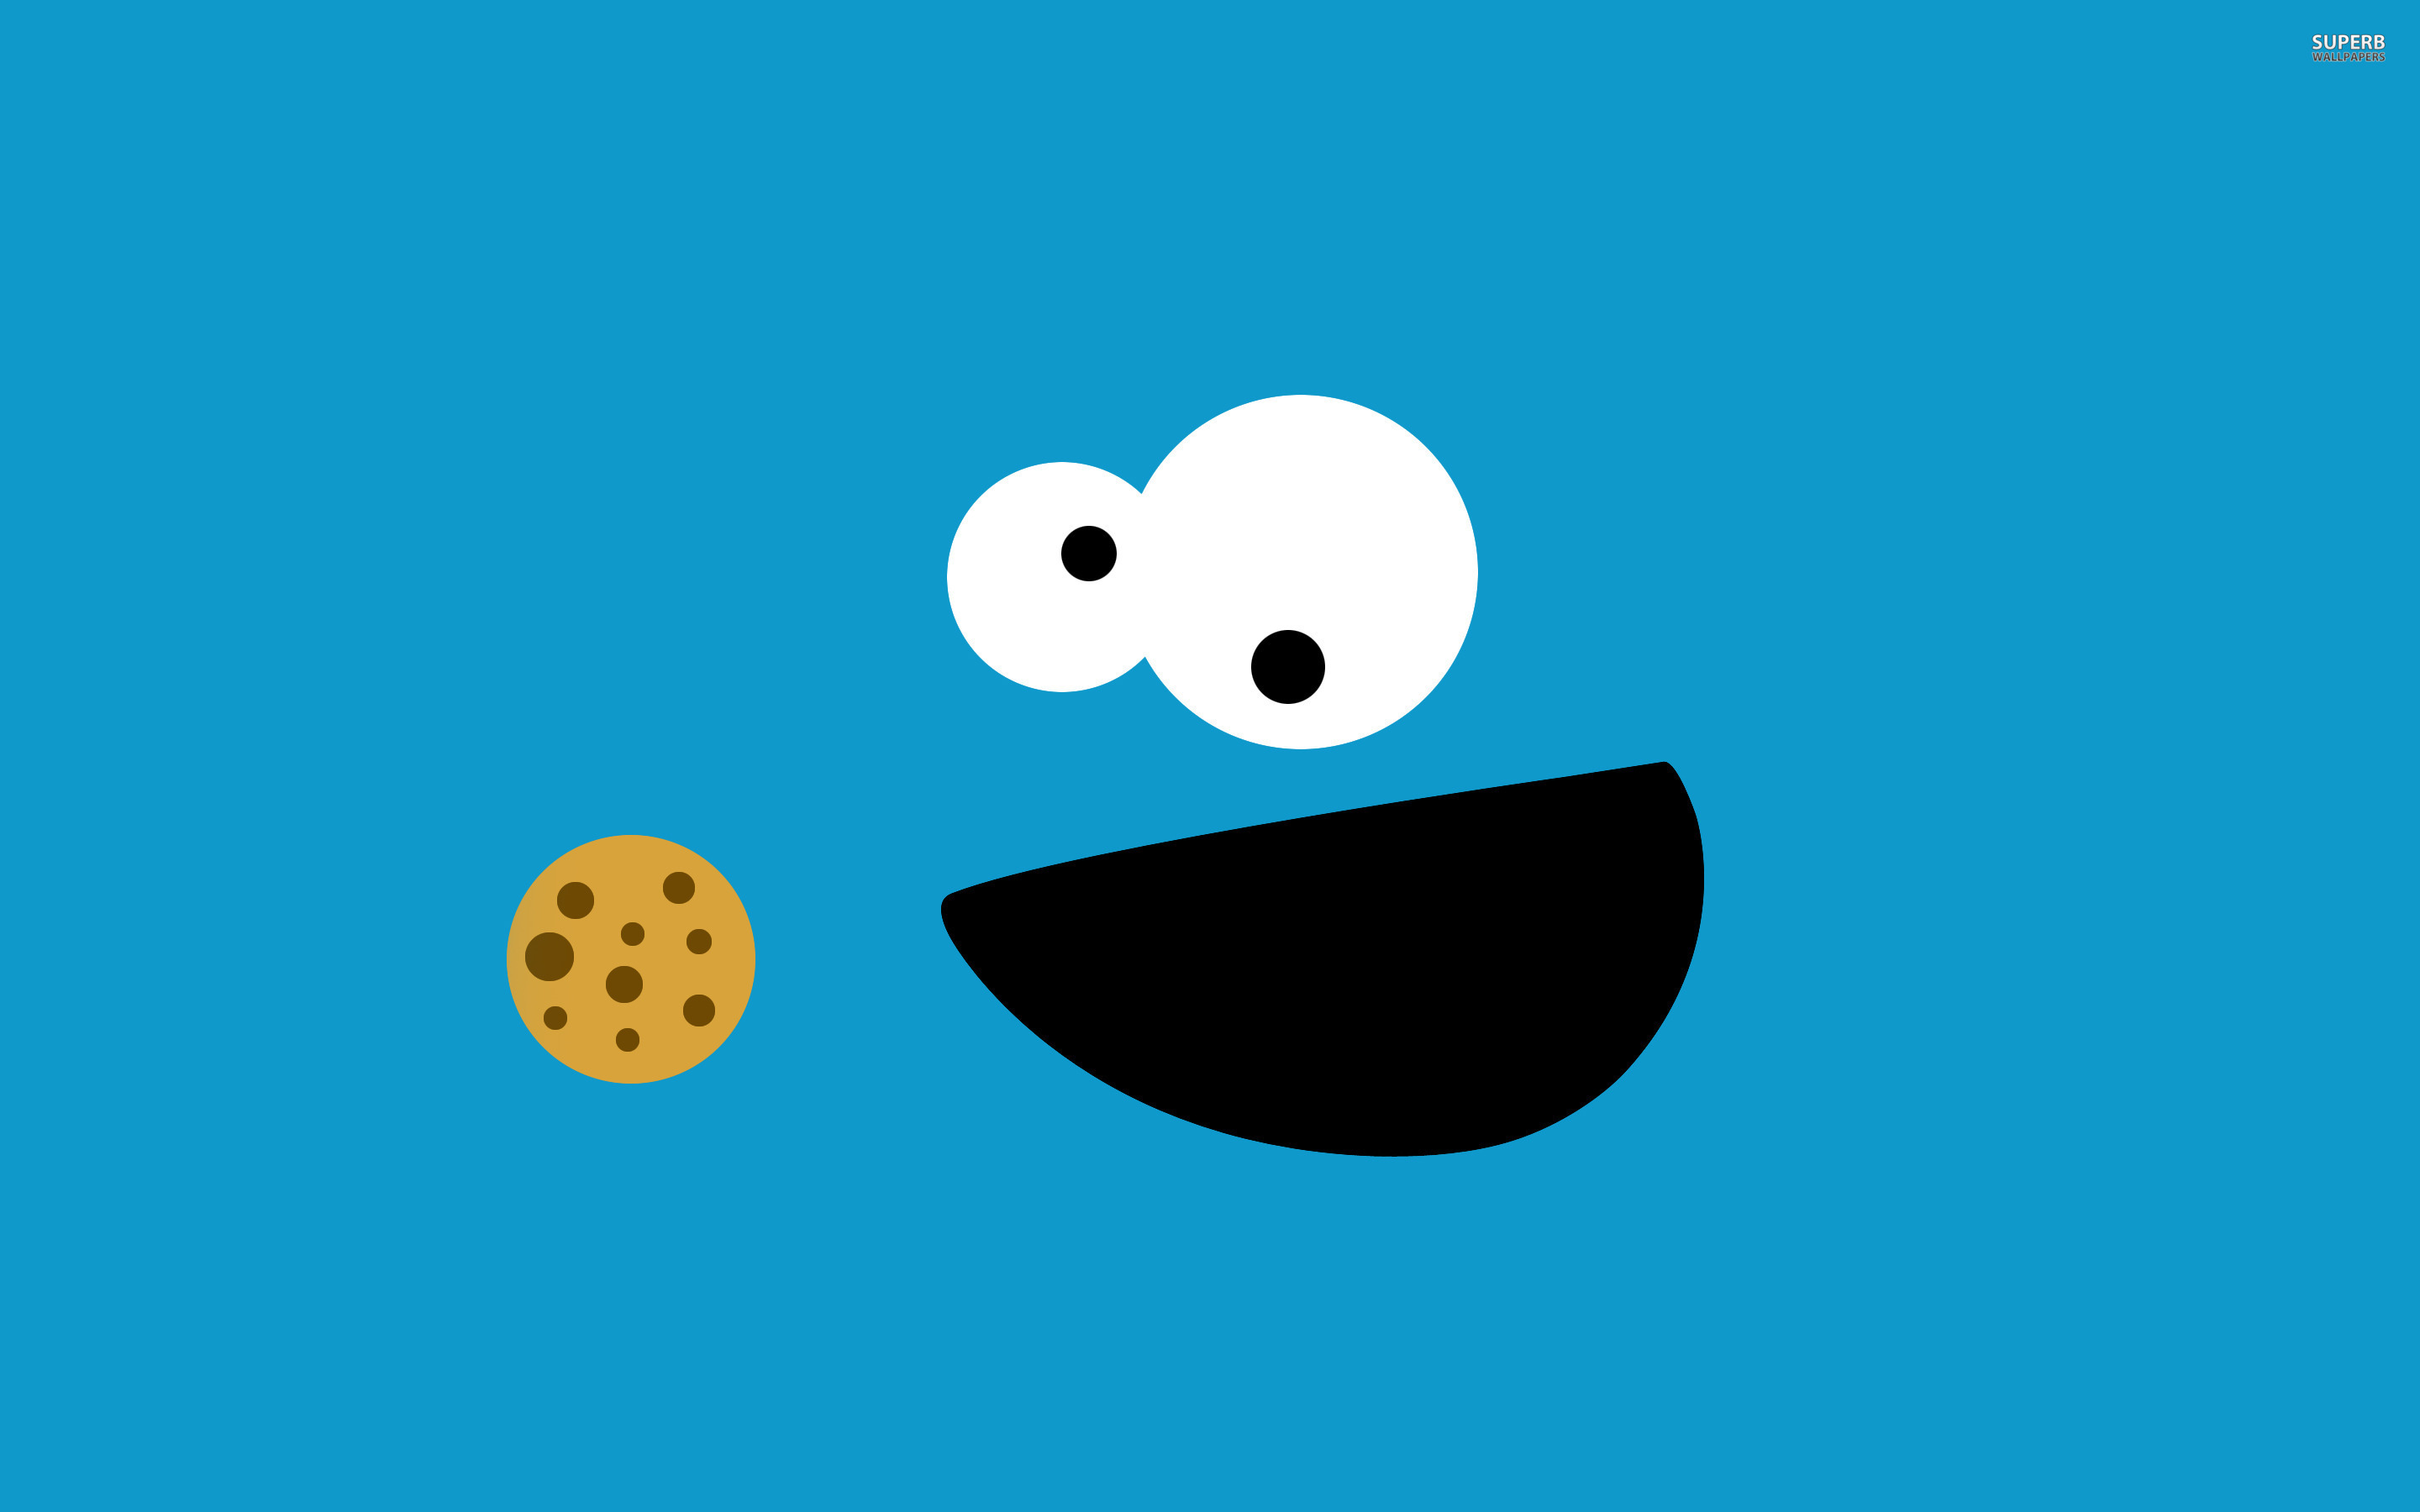 Cookie Monster wallpaper : Desktop and mobile wallpaper : Wallippo